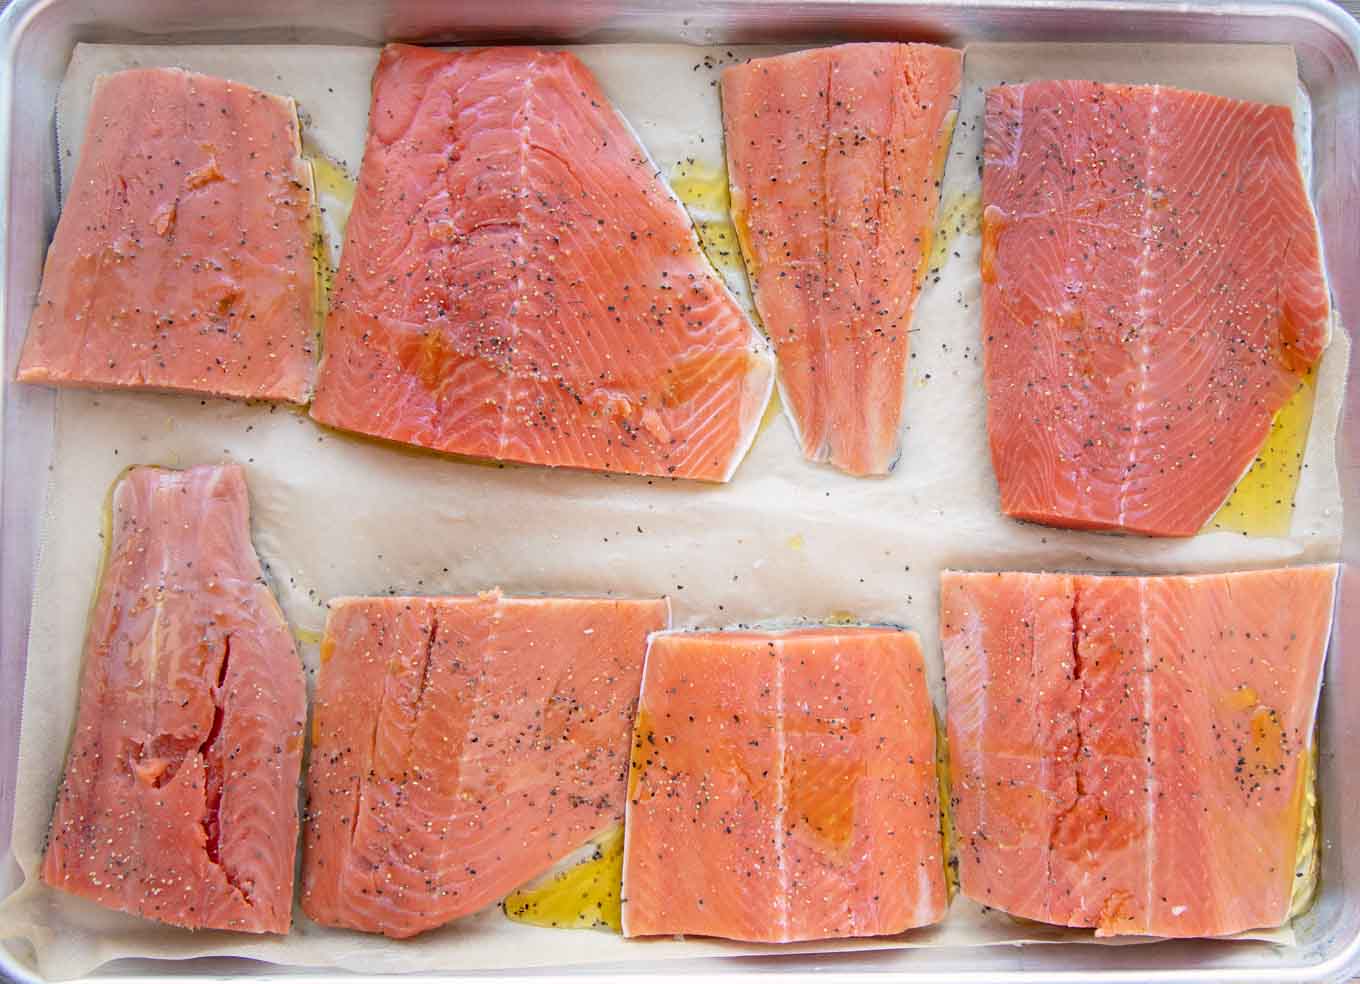 prepared salmon on a sheet pan ready to bake